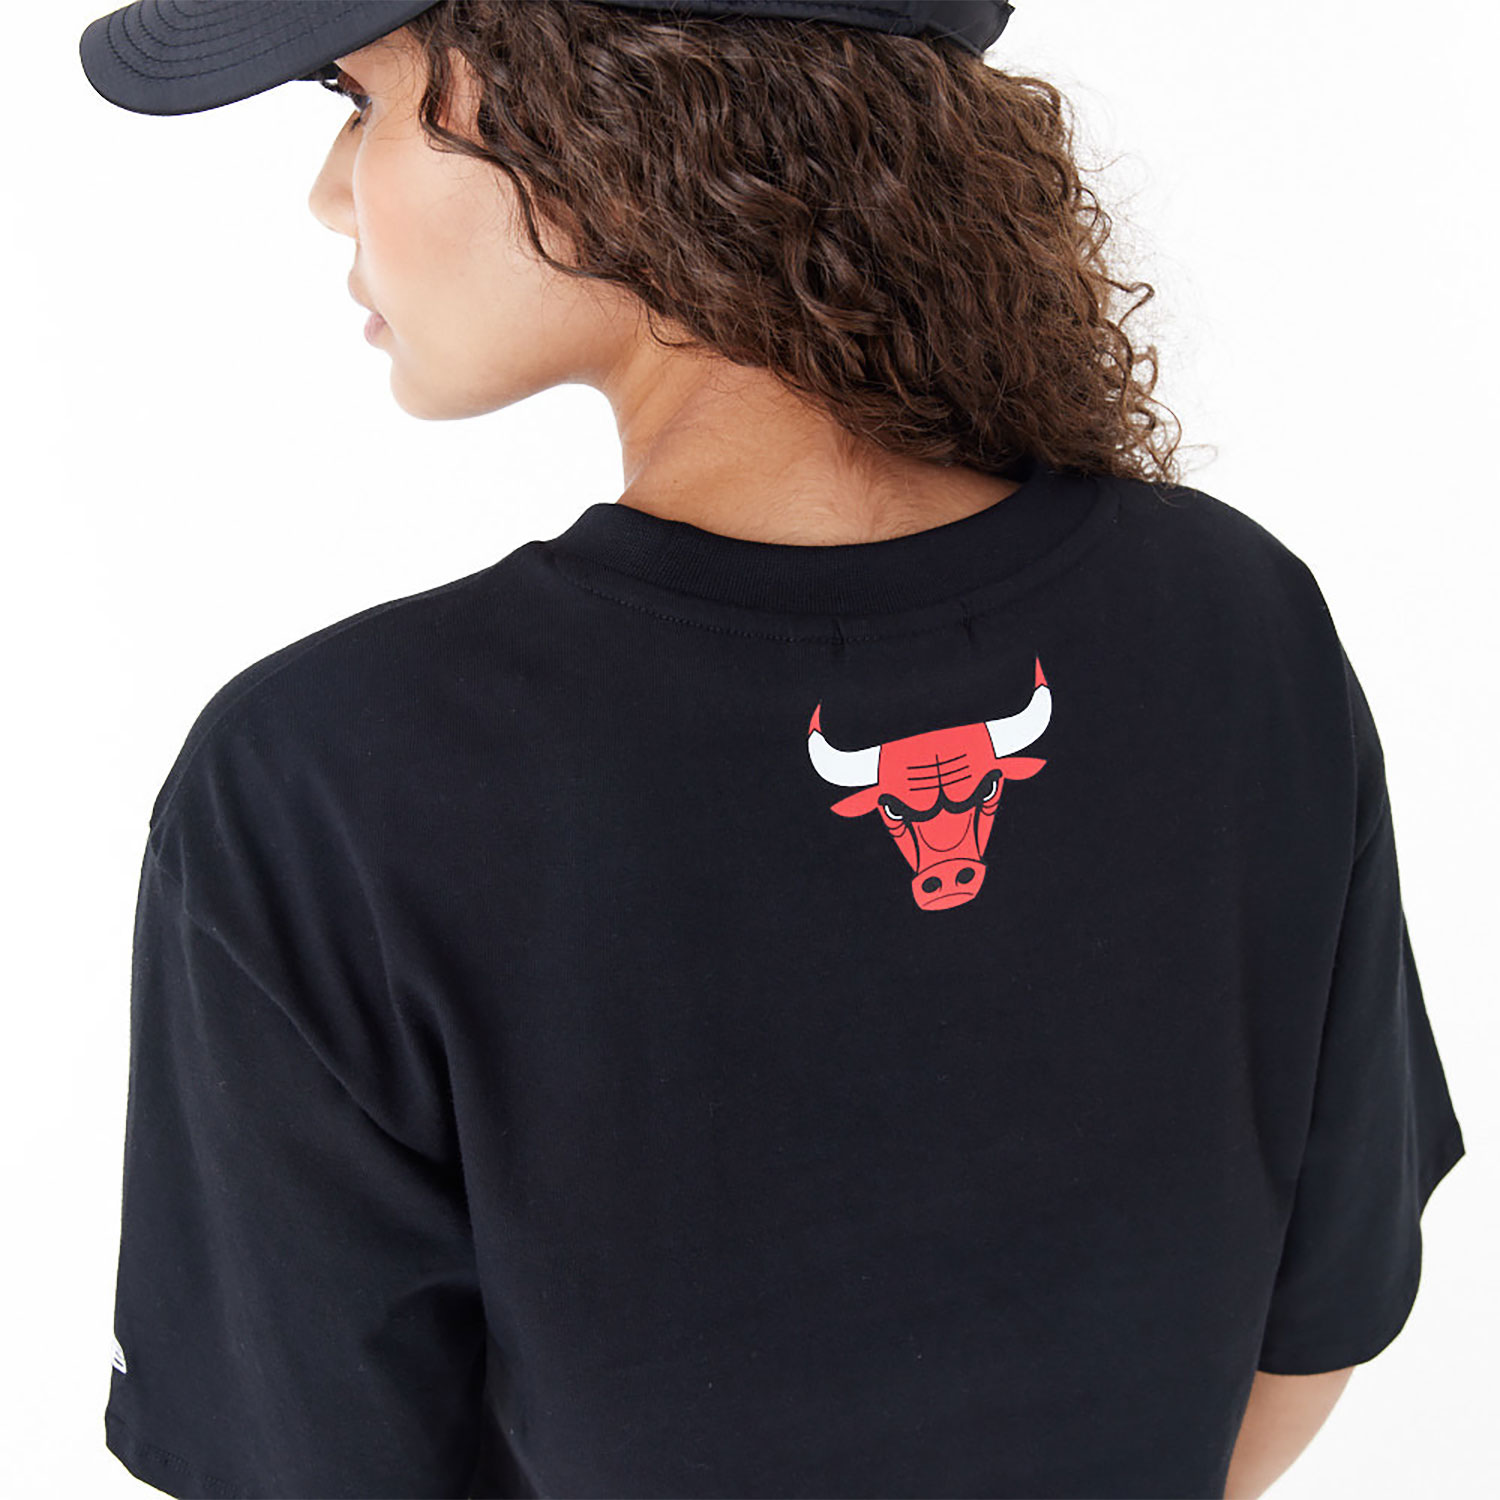 Chicago Bulls Womens NBA Team Wordmark Black Crop T-Shirt